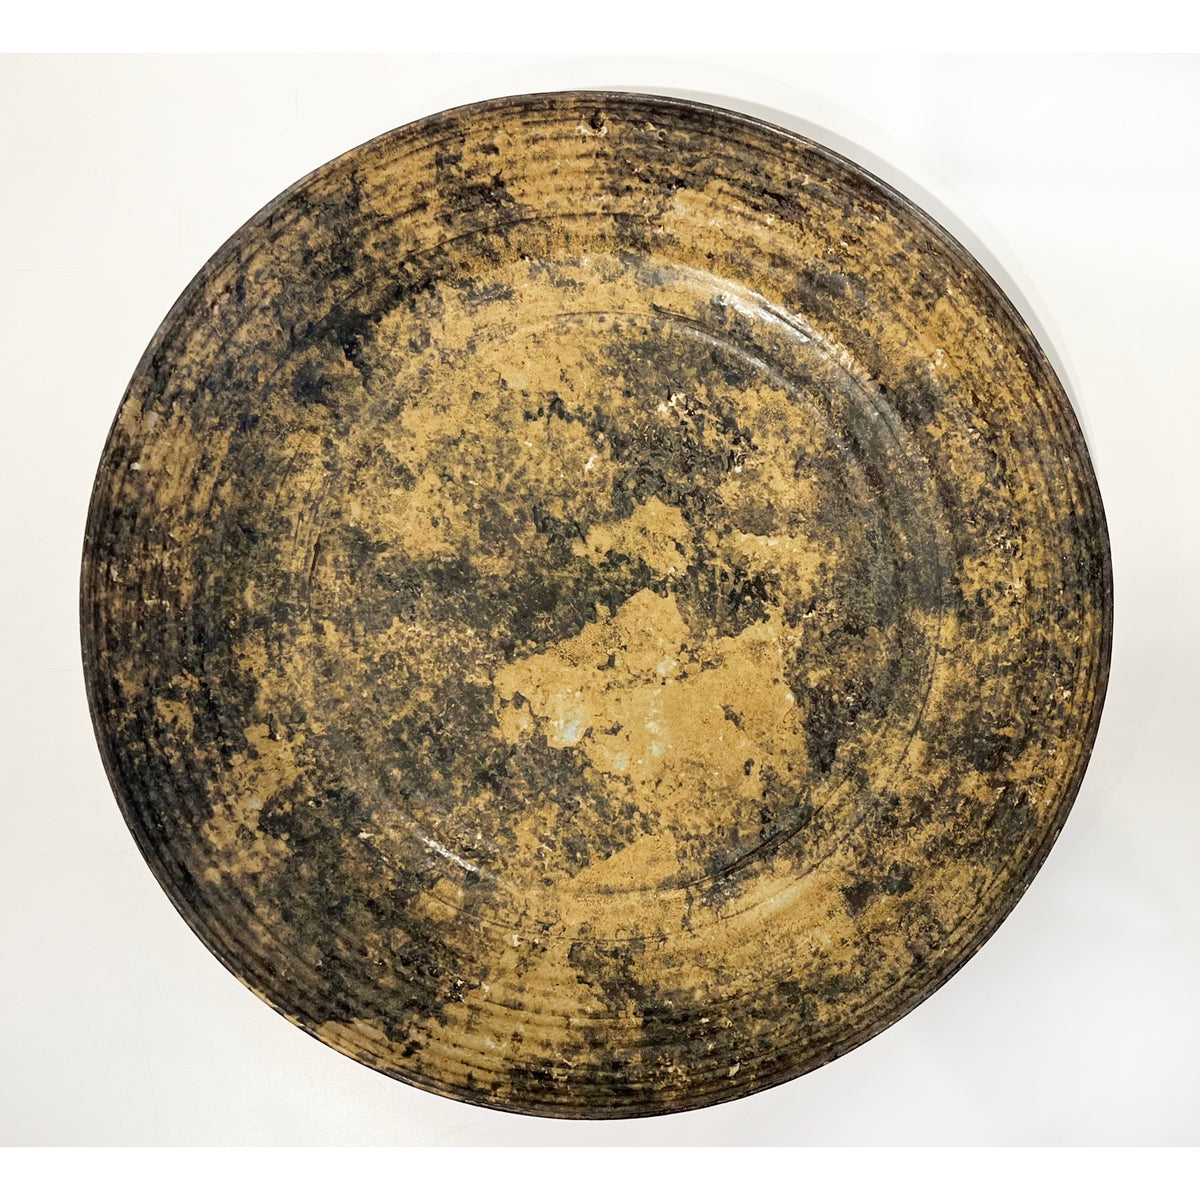 Makiko Hicher - Lg Brown Plate, 3" x 16" x 16"